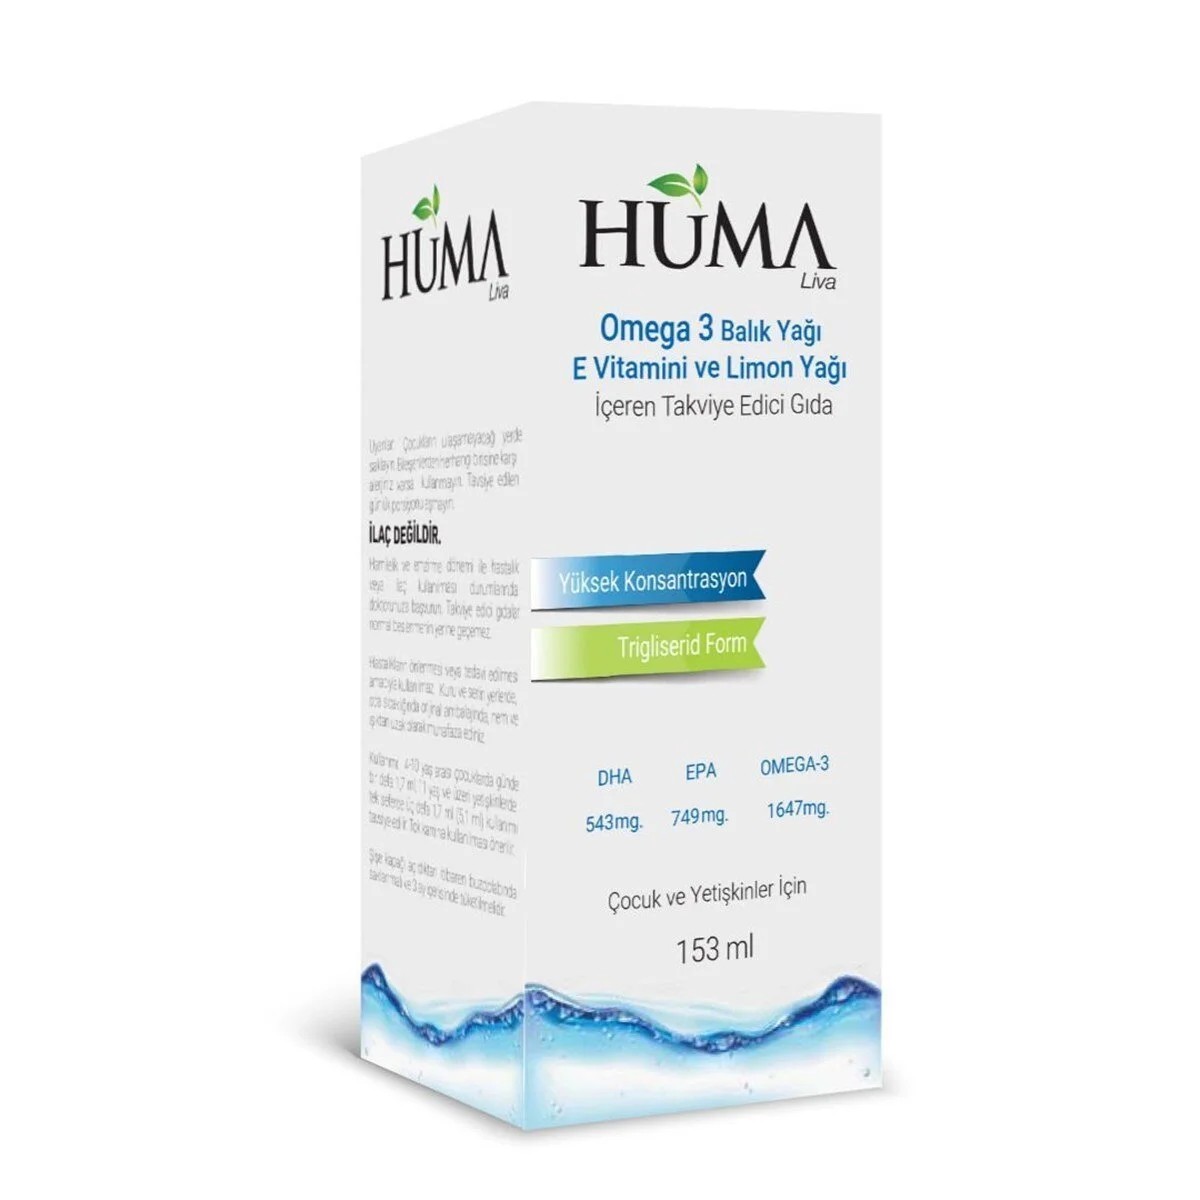 Naturalive - Omega-3 Balık Yağı Huma